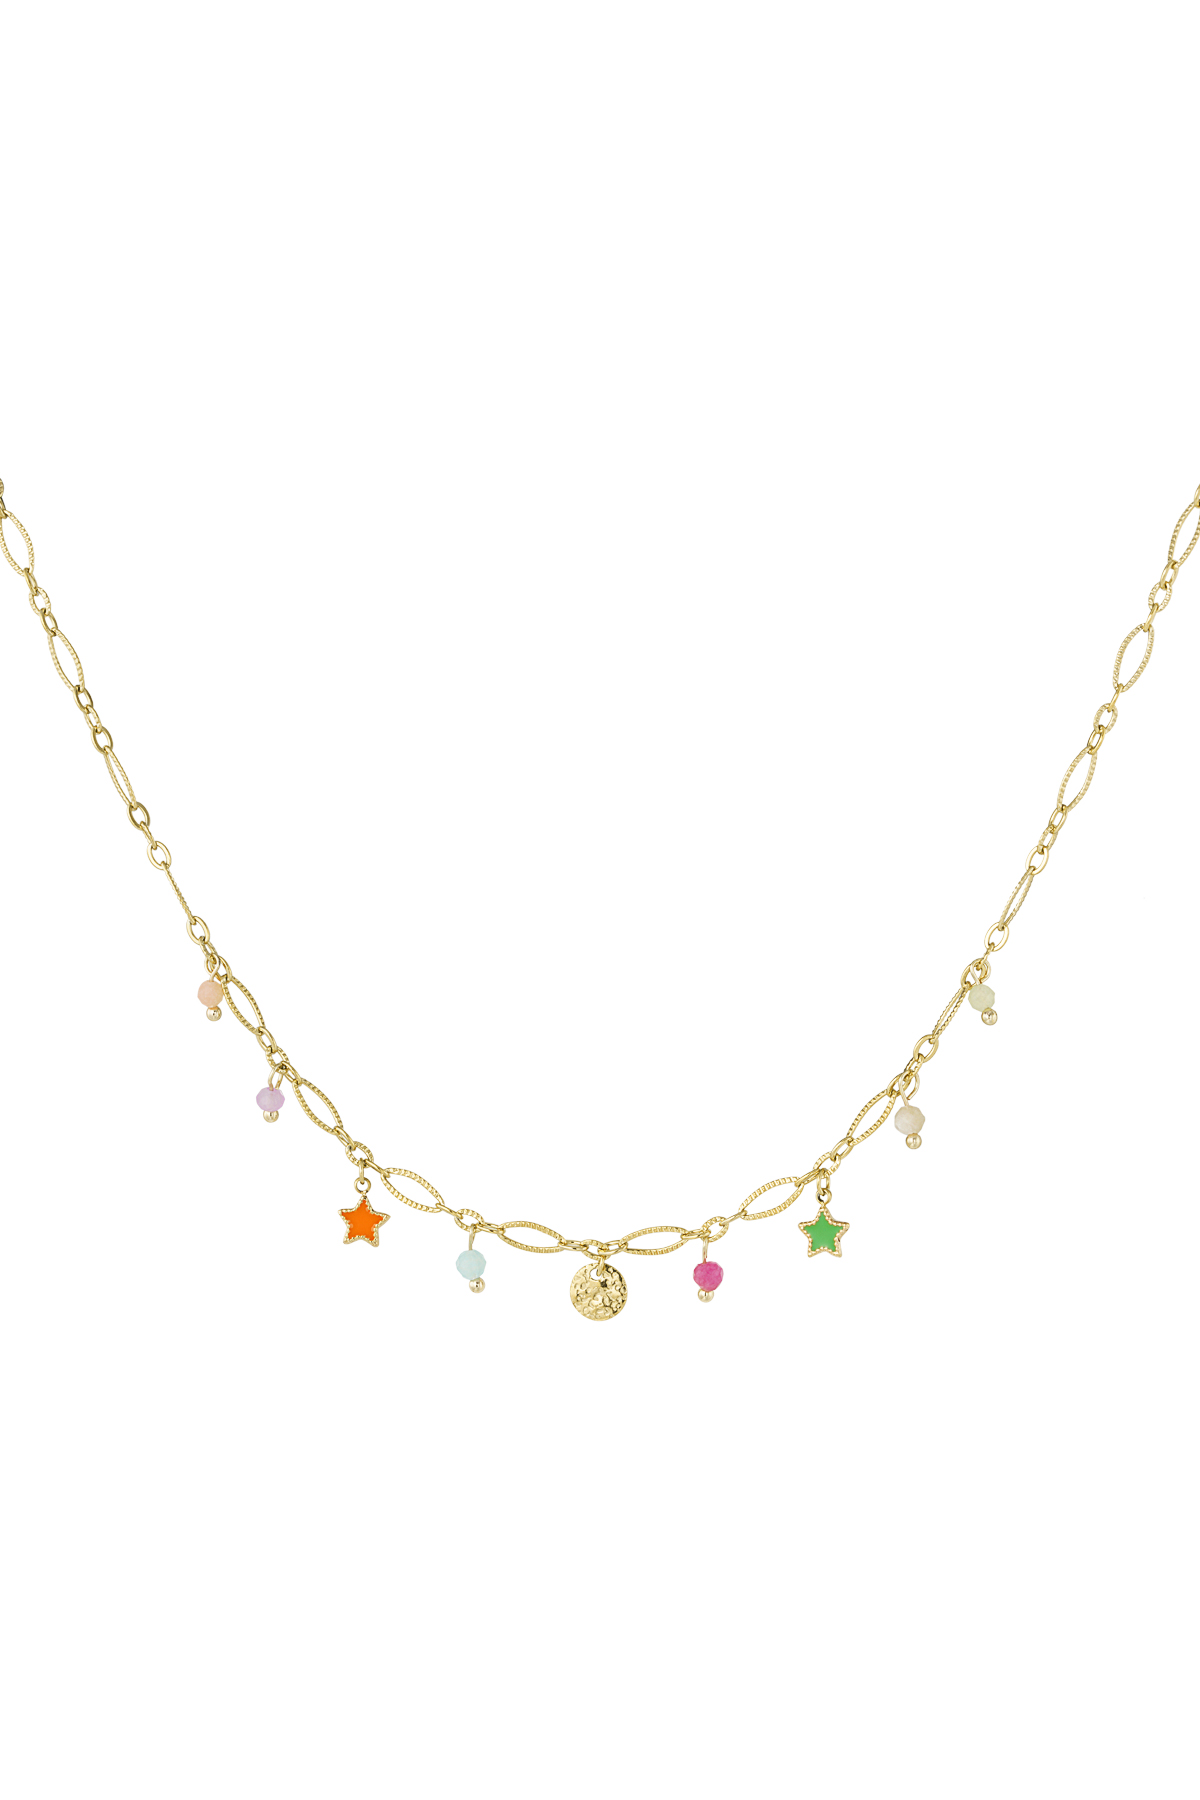 Sparkle party charm necklace - gold 